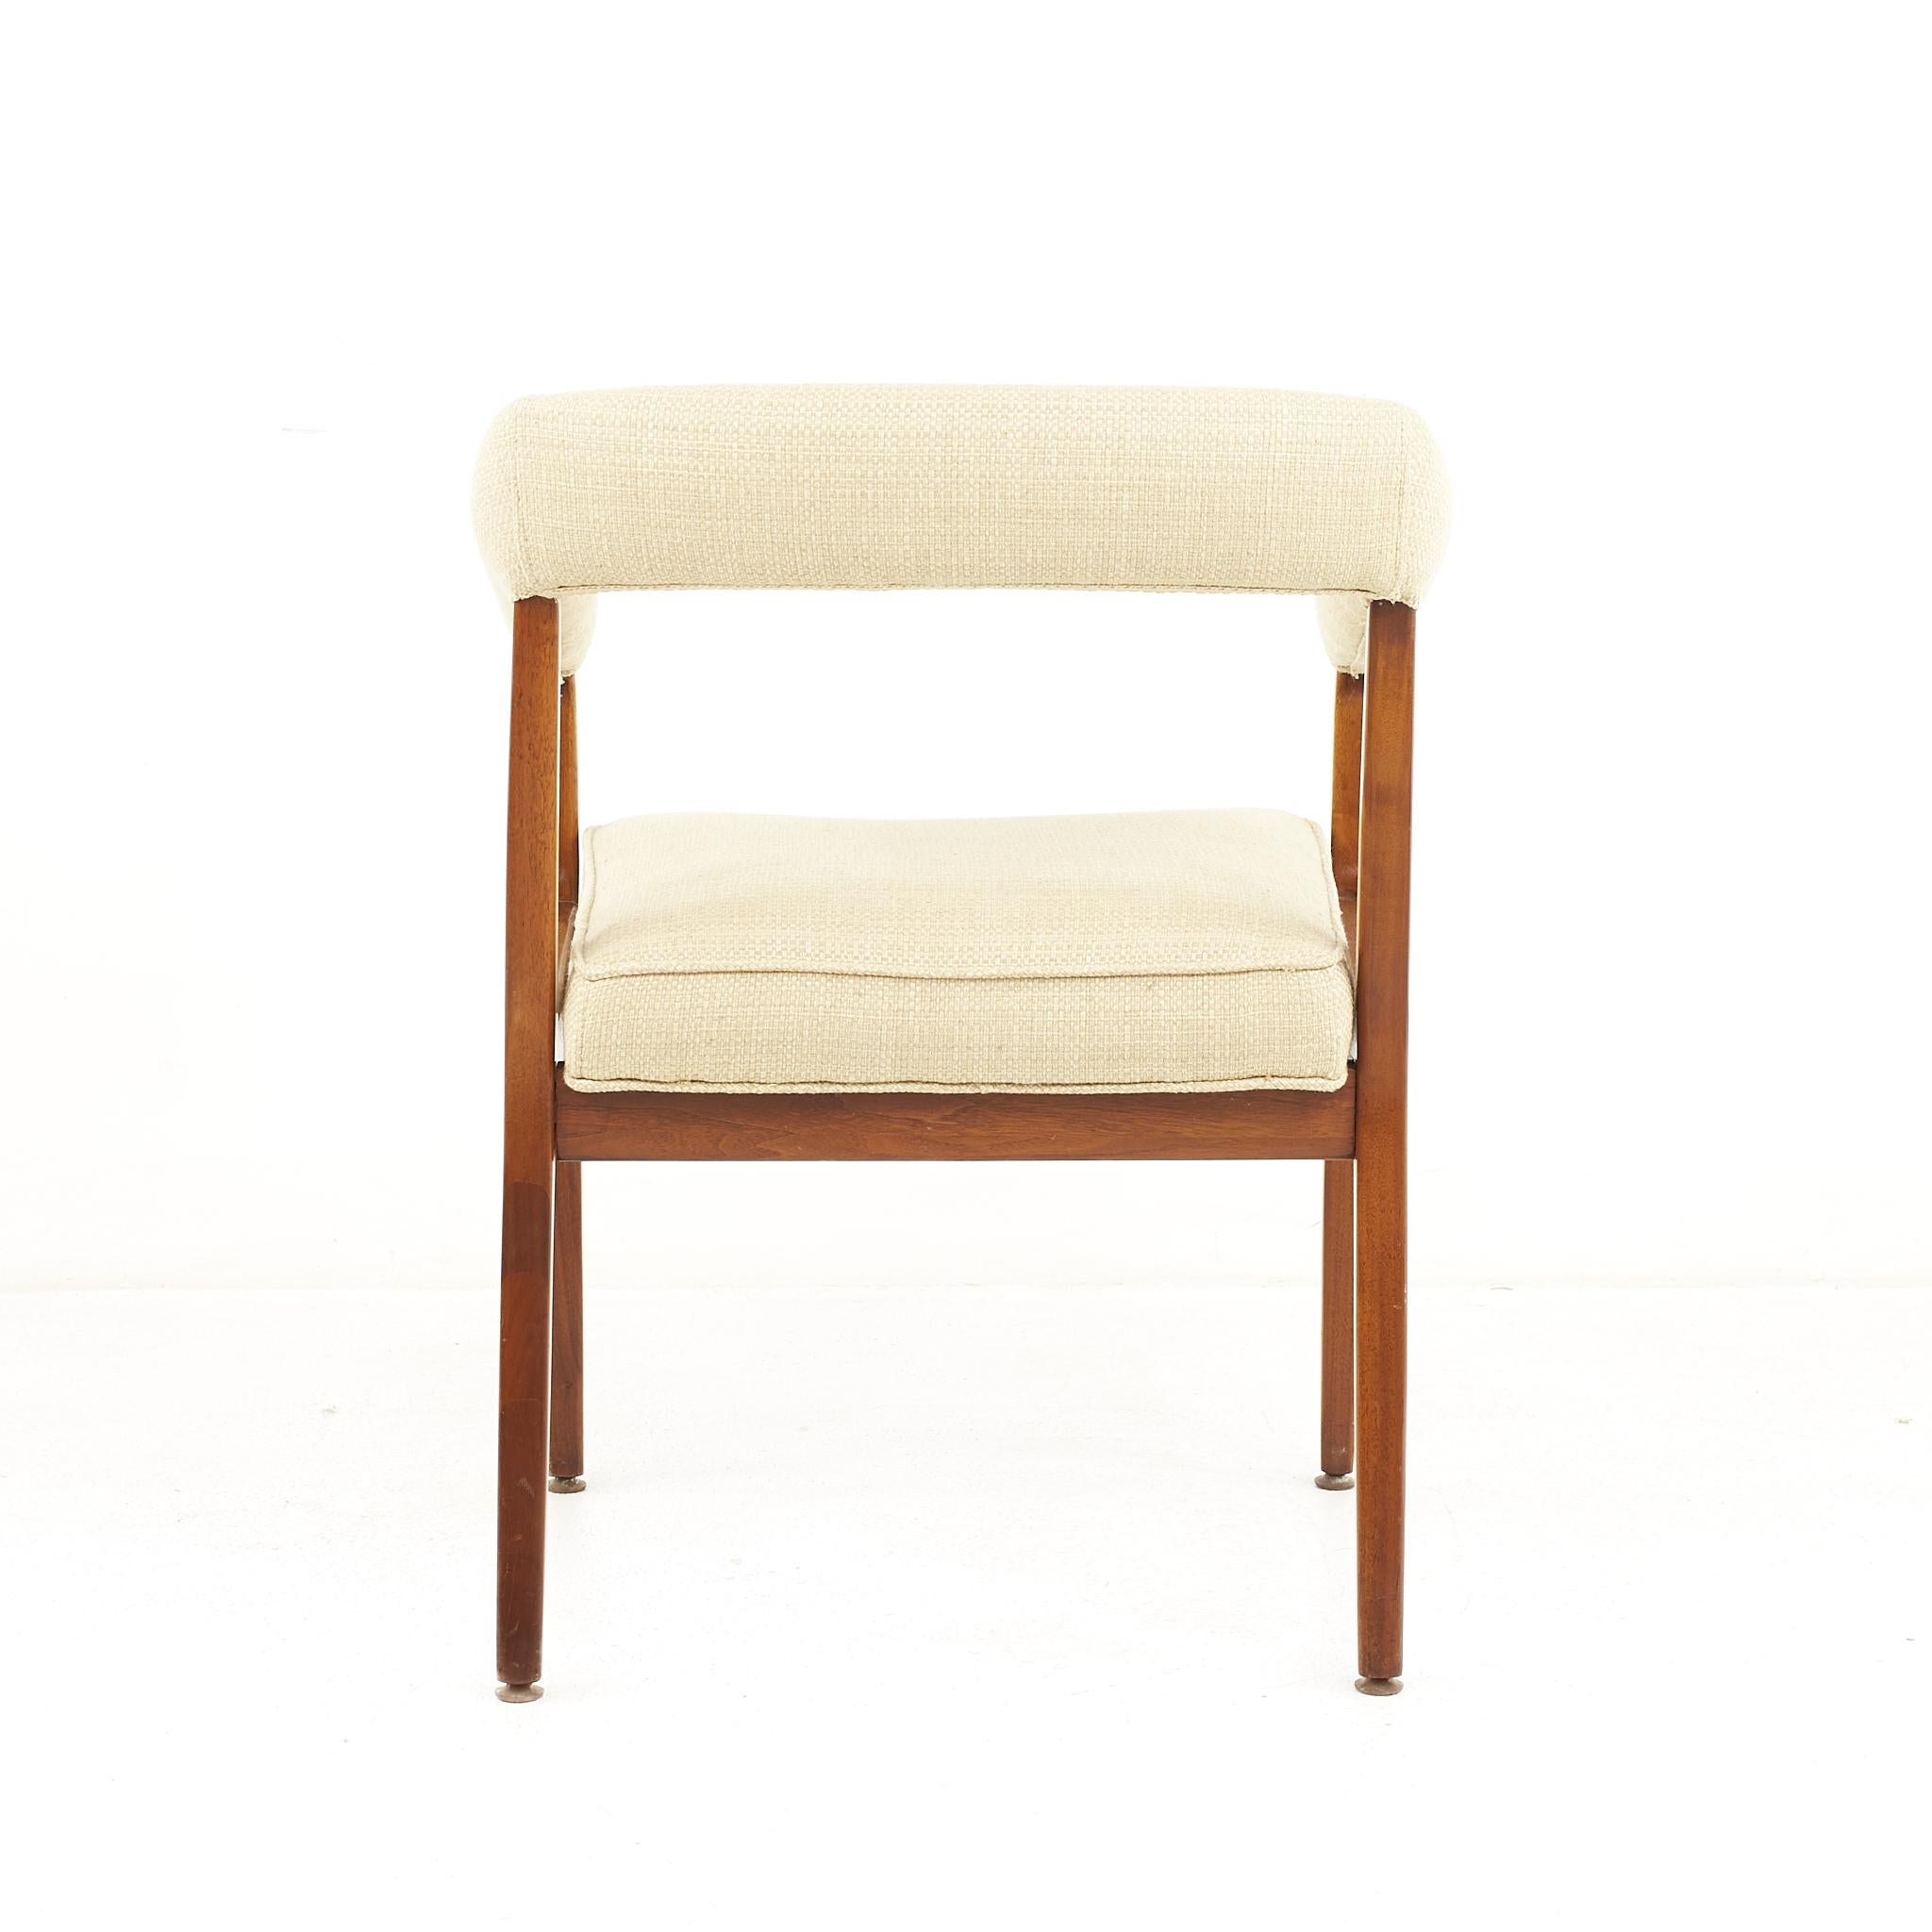 Kai Kristiansen Style Mid Century Danish Teak Occasional Lounge Chairs, A Pair For Sale 2